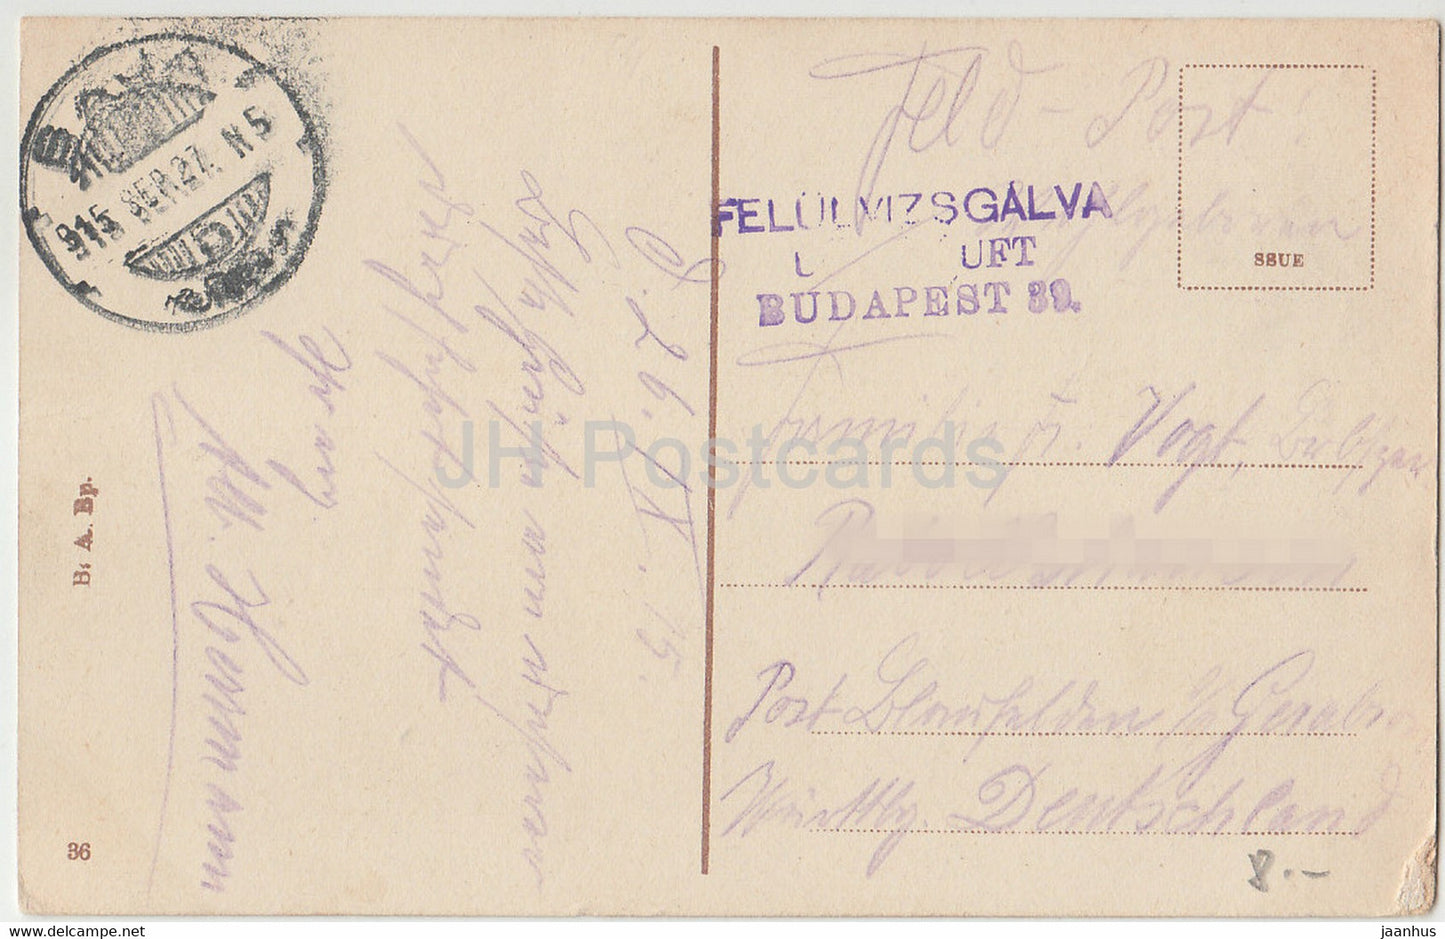 Budapest - Vajda Hunyad vara - Burg von Vajda Hunyad - Feldpost - old postcard - 1915 - Hungary - used